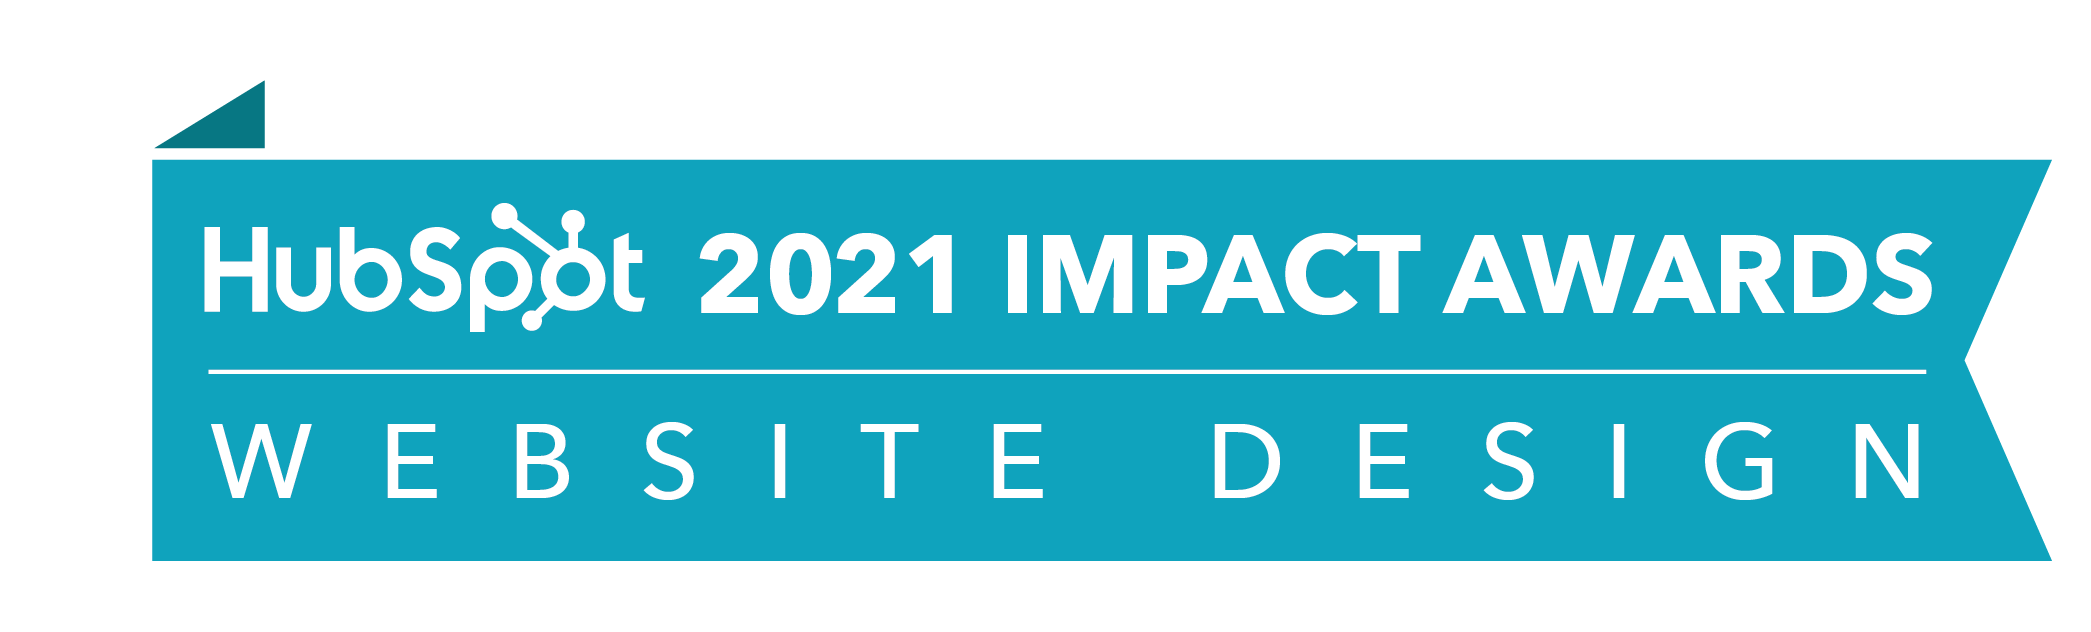 HubSpot_ImpactAwards_2021_WebsiteDesign2-2